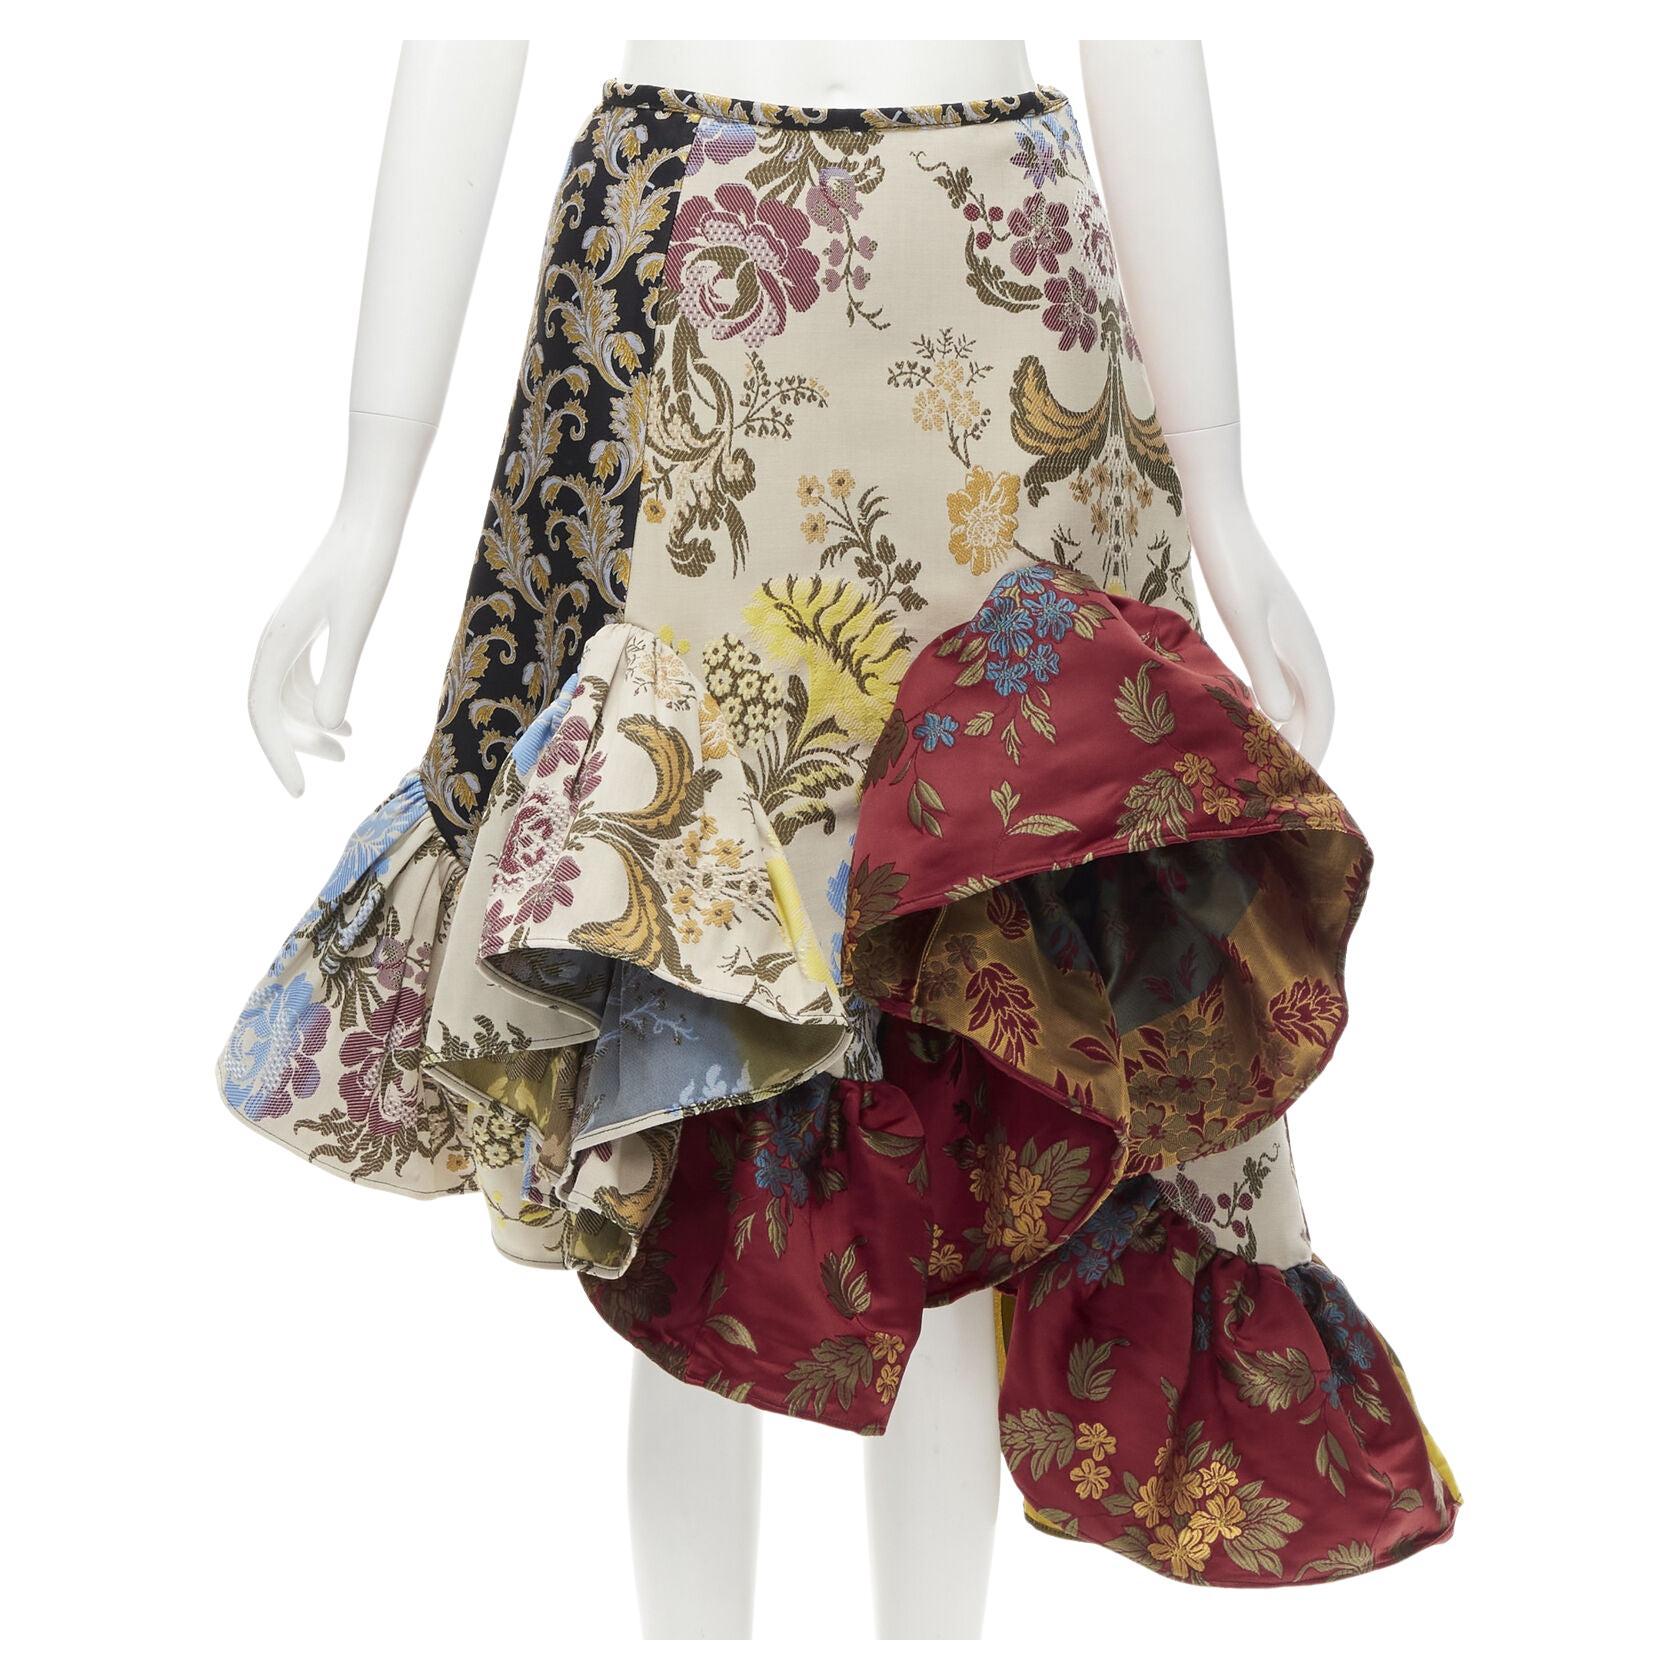 MARQUES ALMEIDA Net Sustain Remade 2020 patchwork brocade ruffled skirt UK6 XS